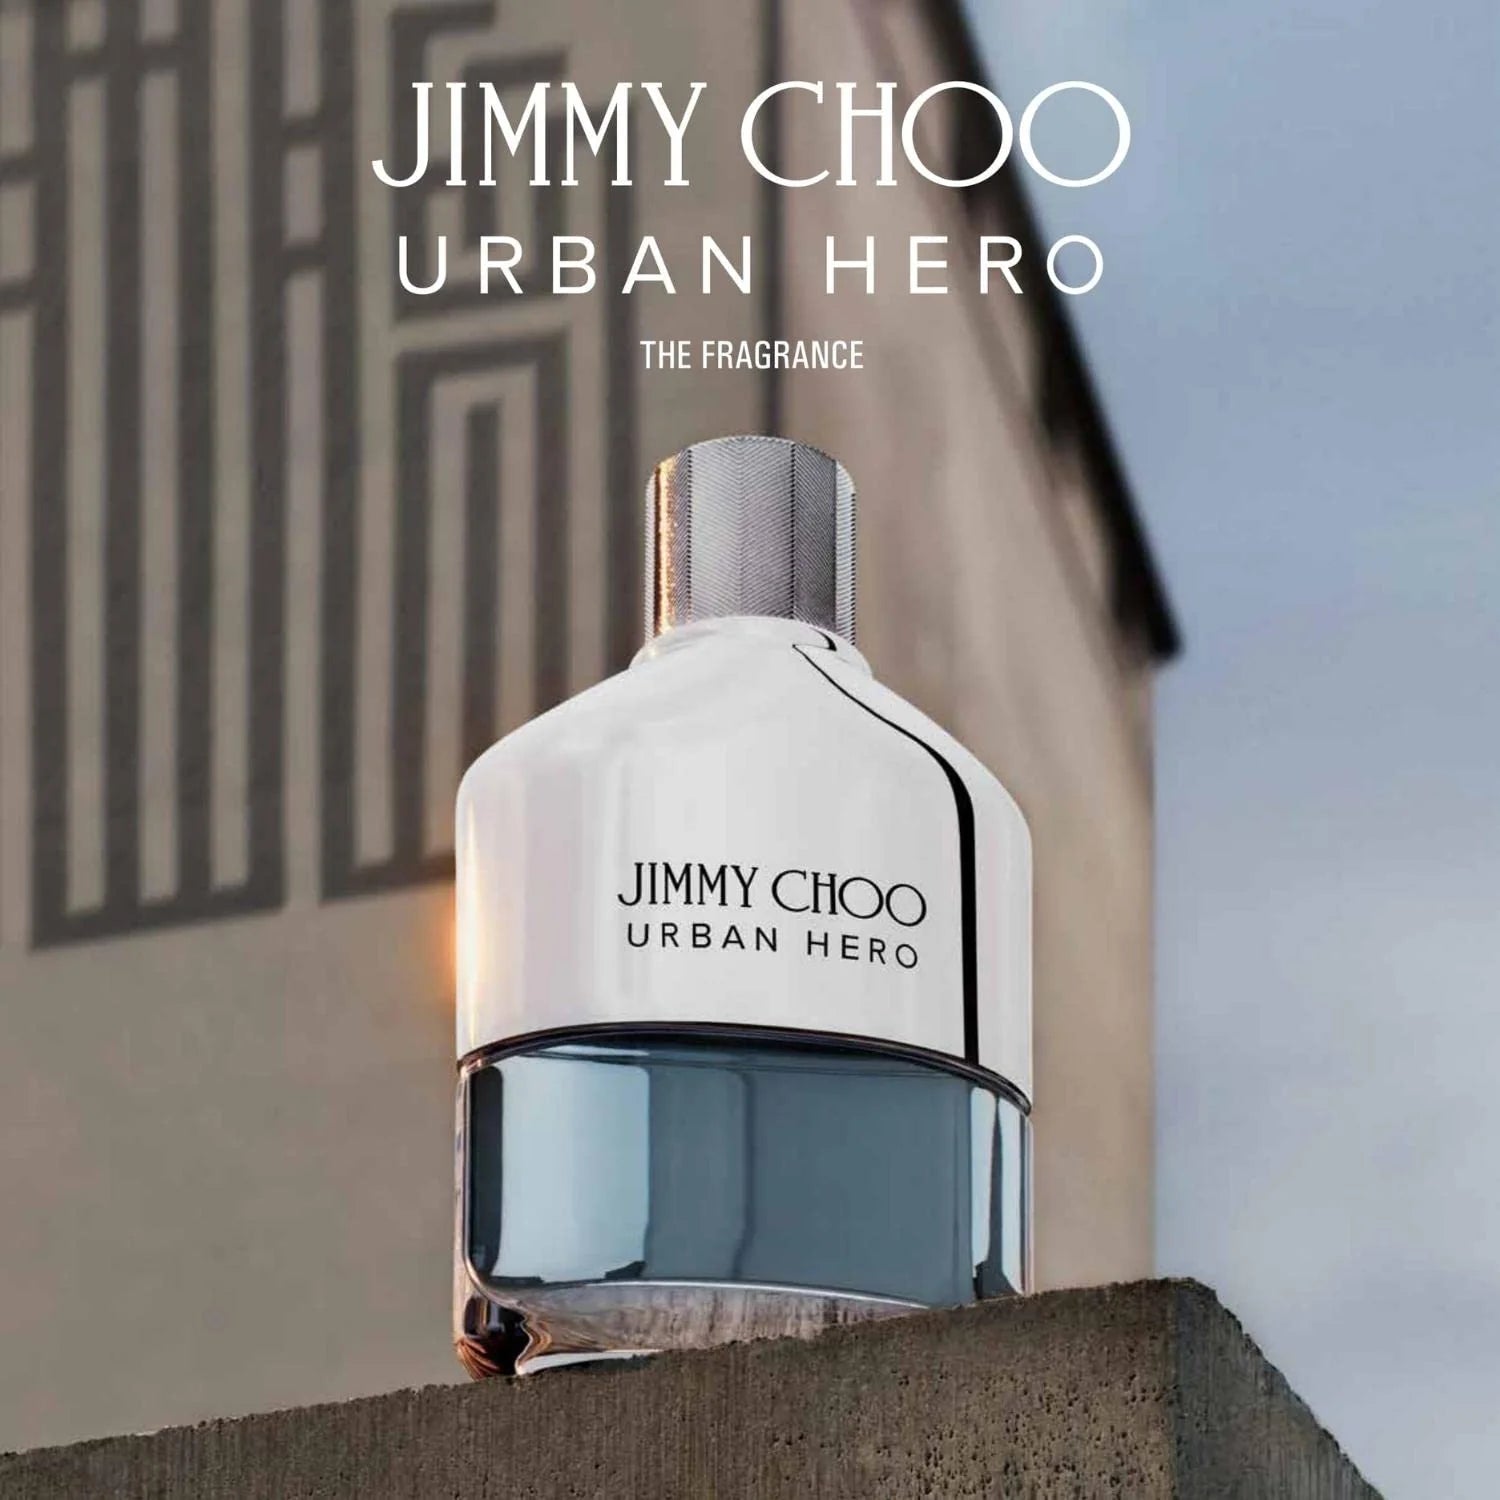 Jimmy Choo Urban Hero Deodorant Stick | My Perfume Shop Australia